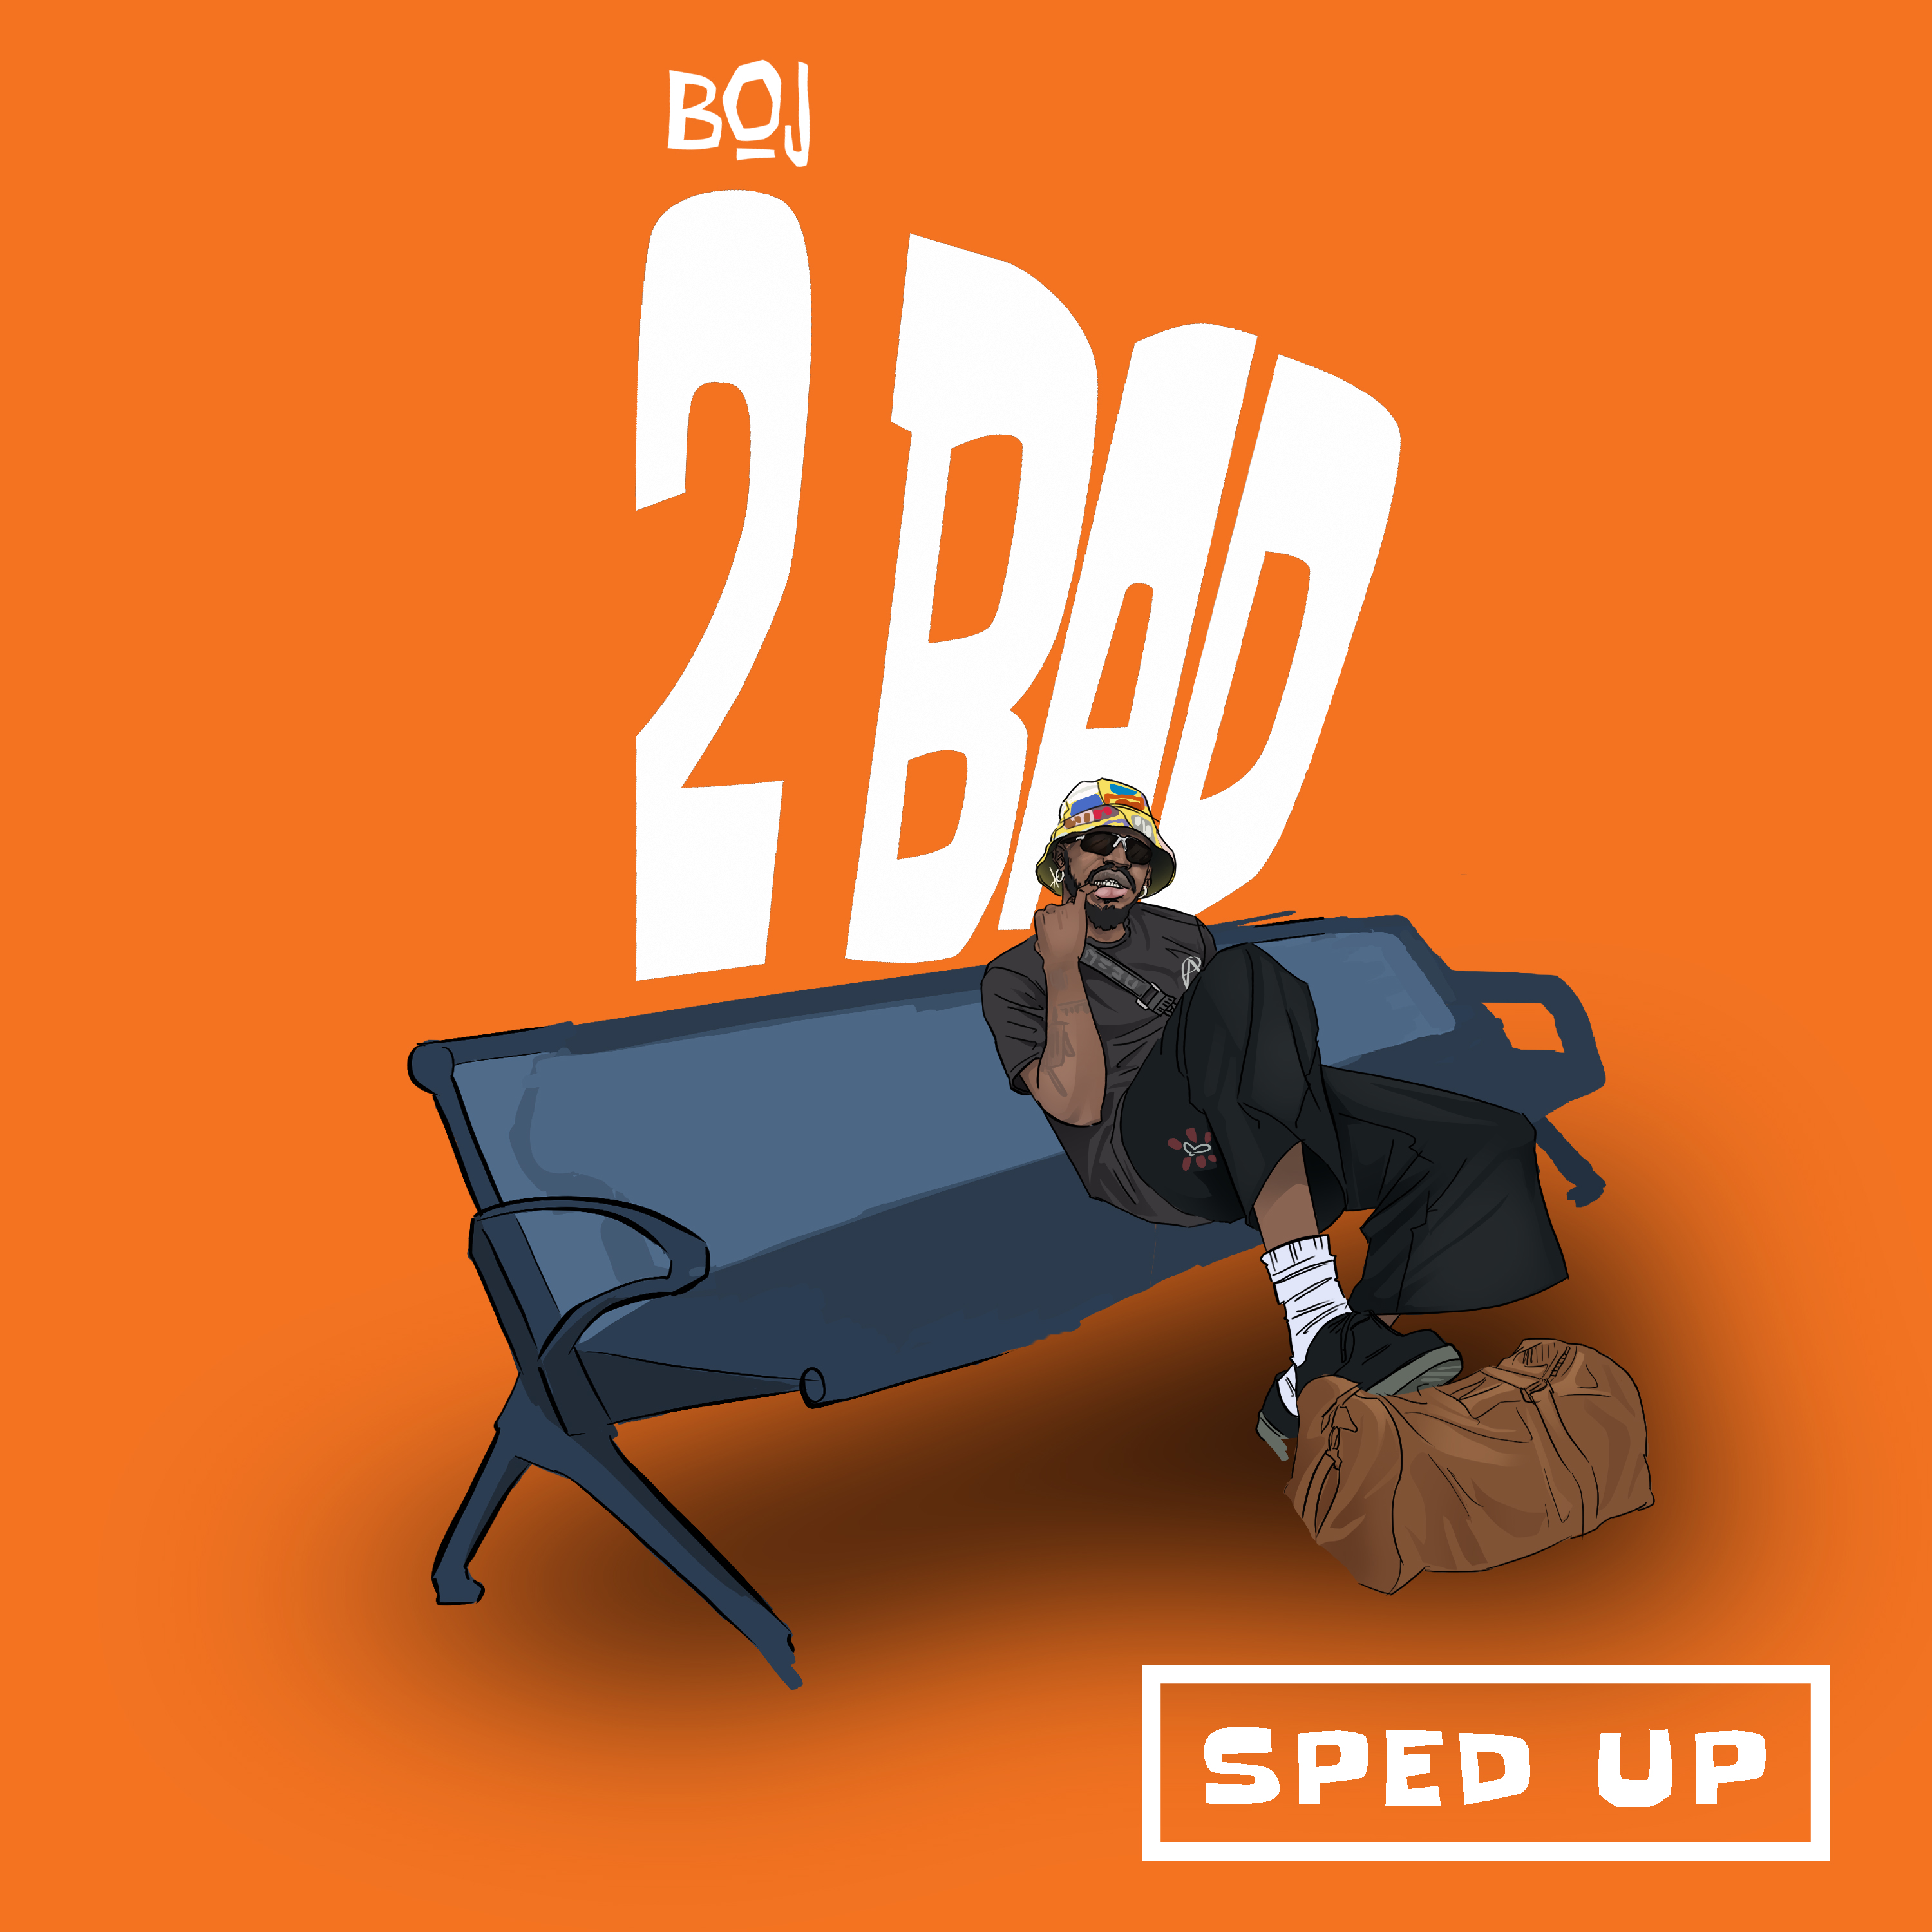 Boj - 2 Bad (Speed Up)